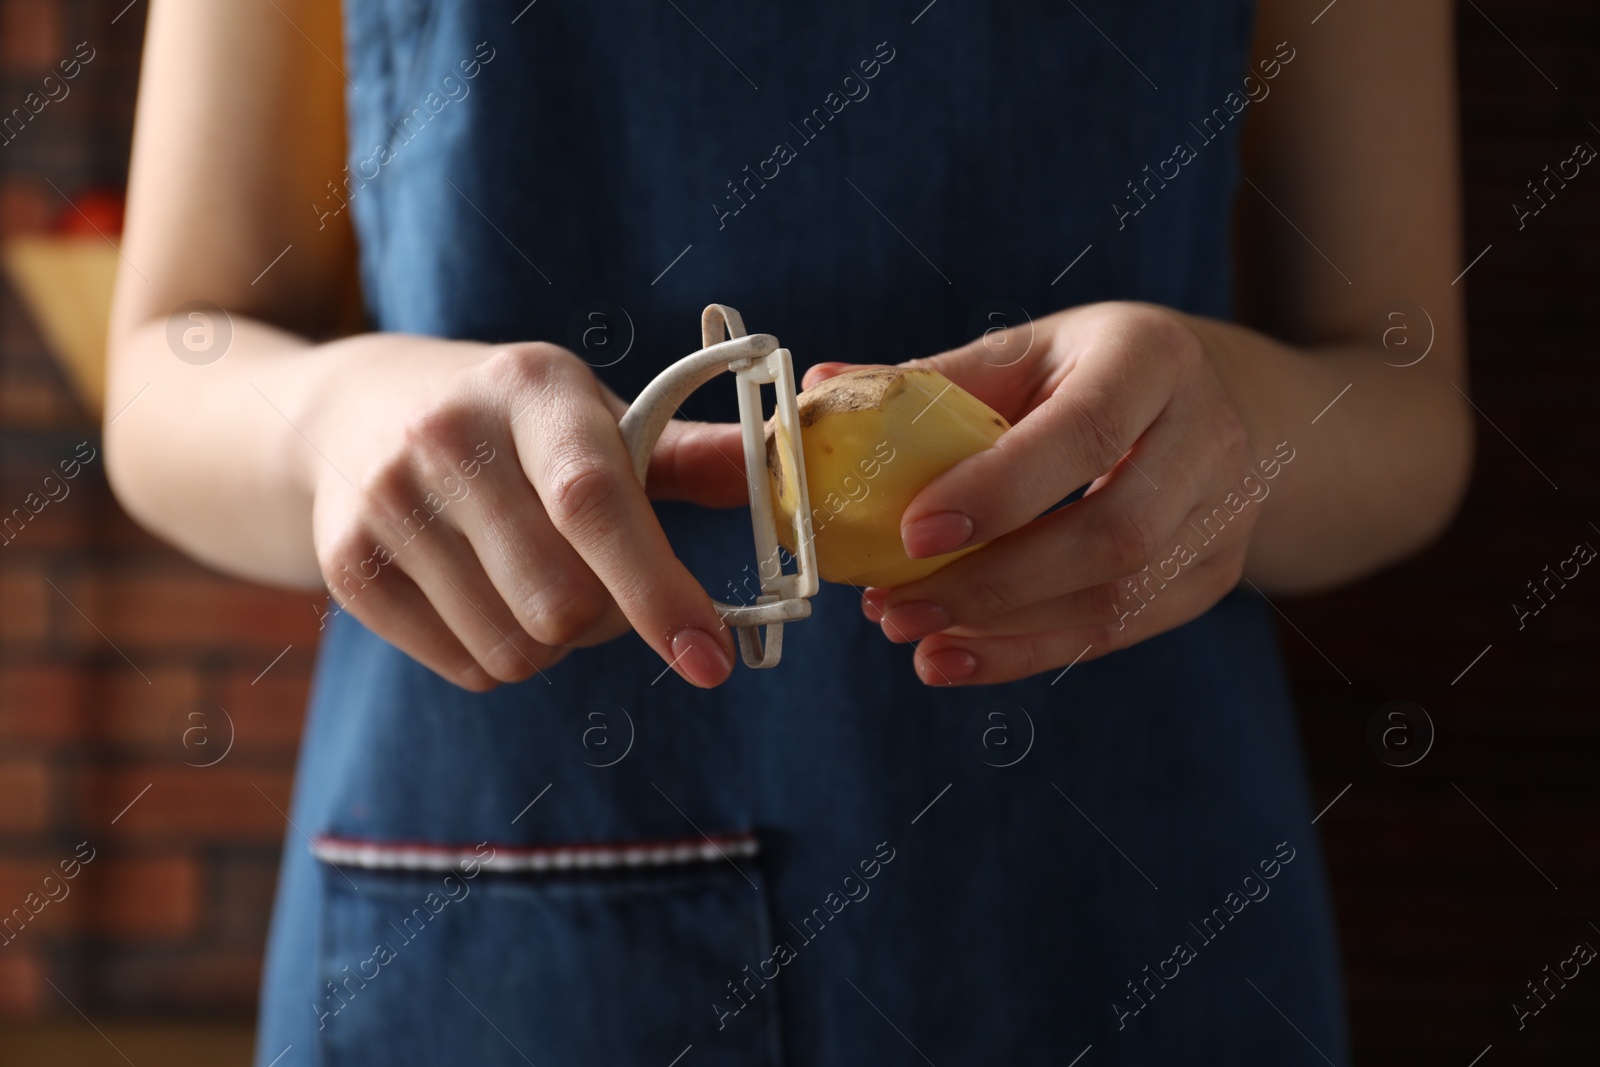 Photo of Woman peeling fresh potato indoors, closeup view